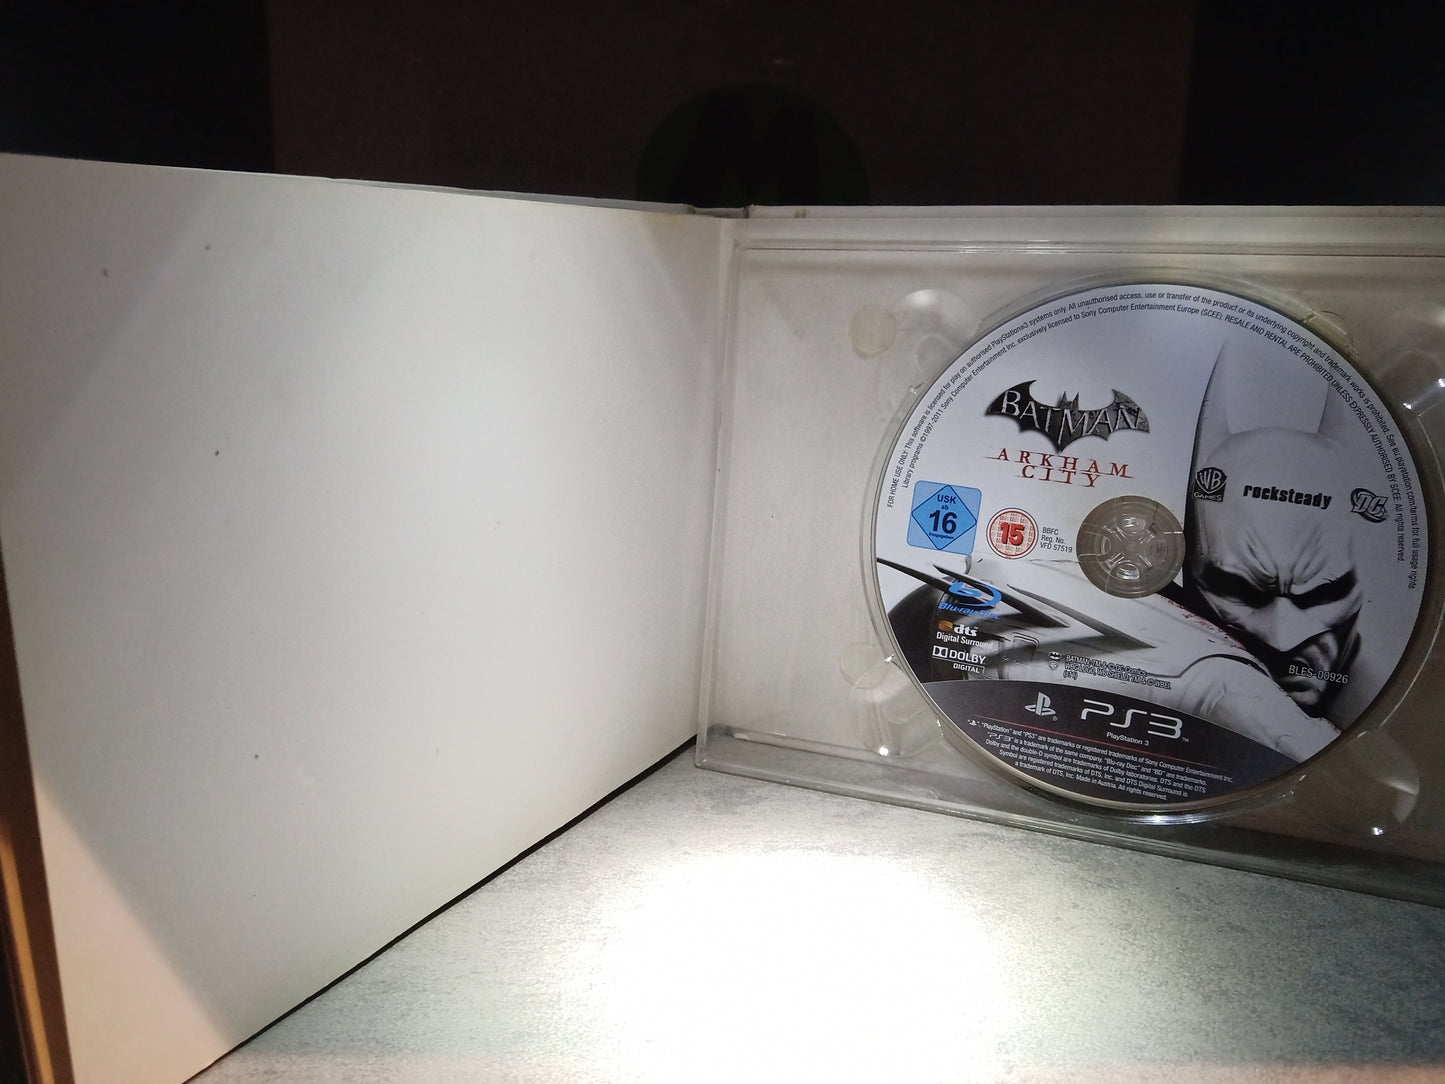 Batman Arkham City Special Edition + Dualshock 3